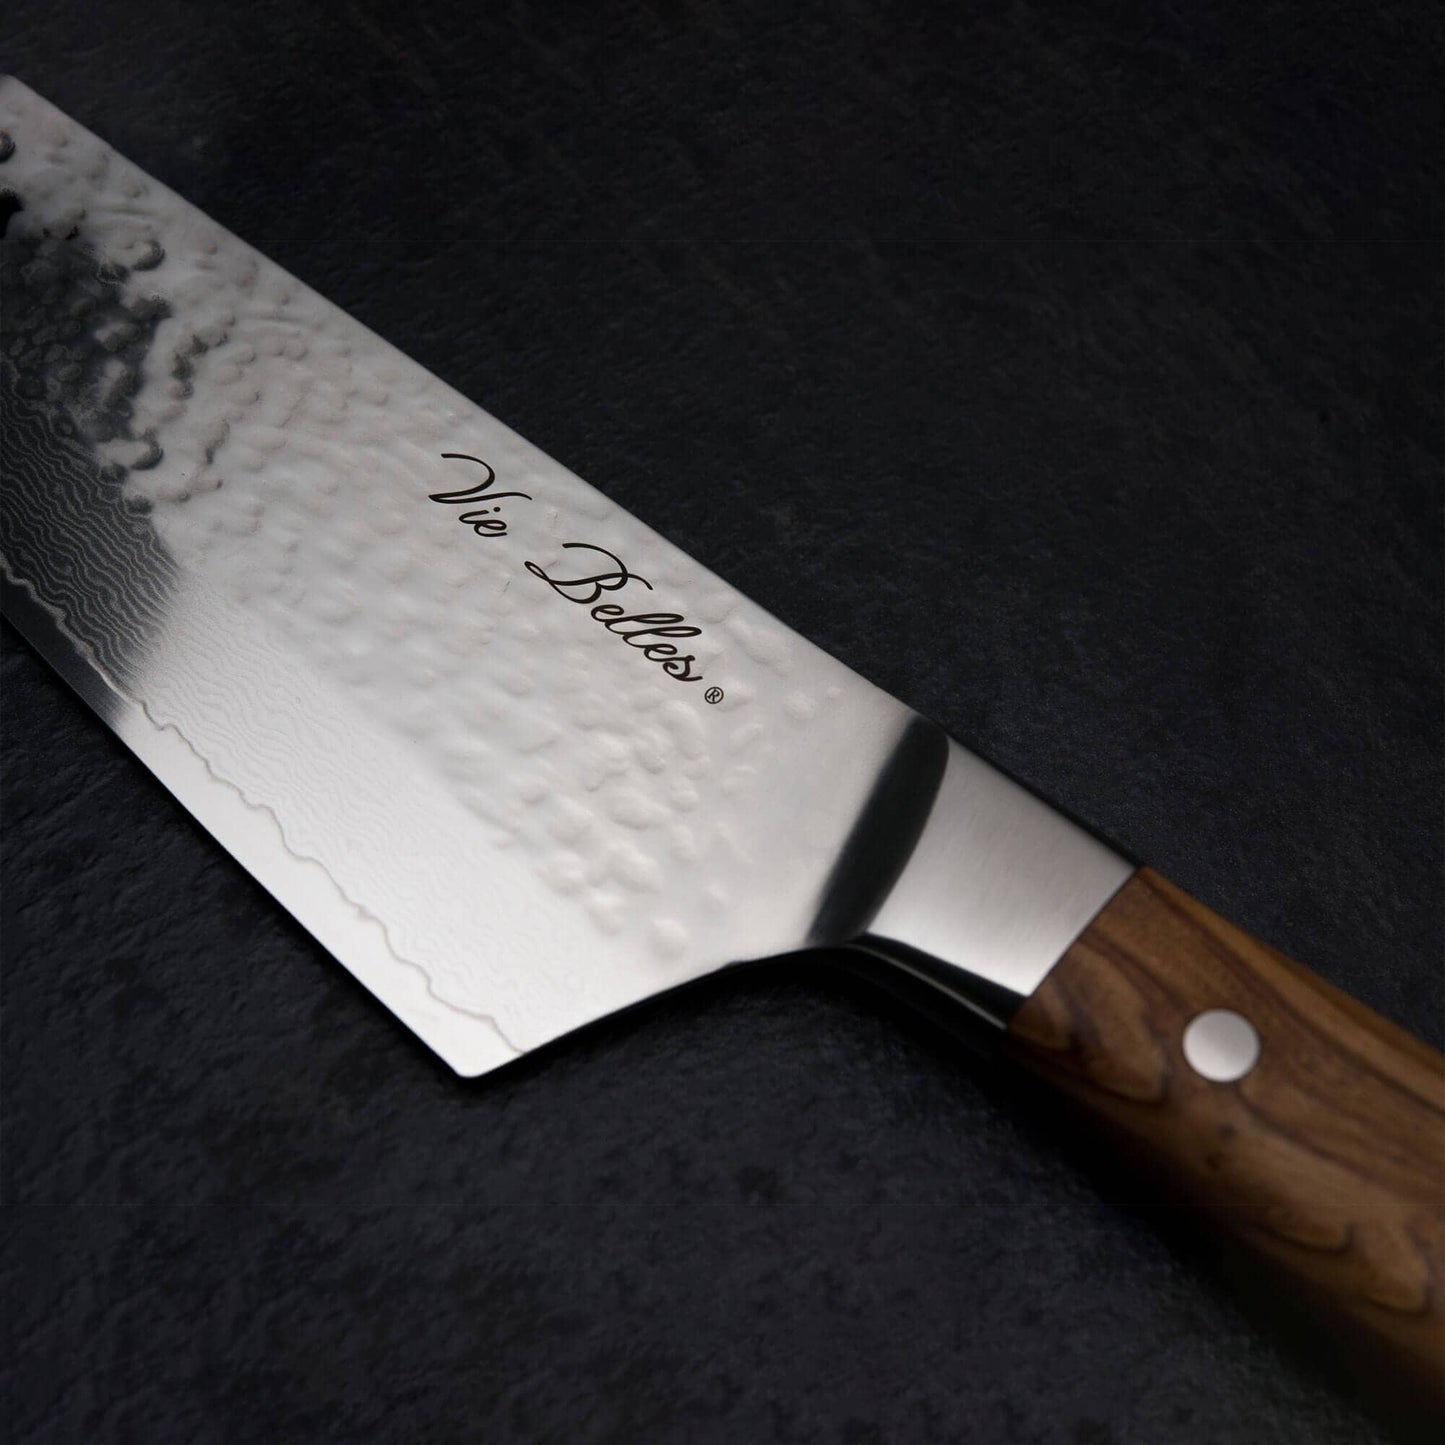 Pro 8" Chef's Knife